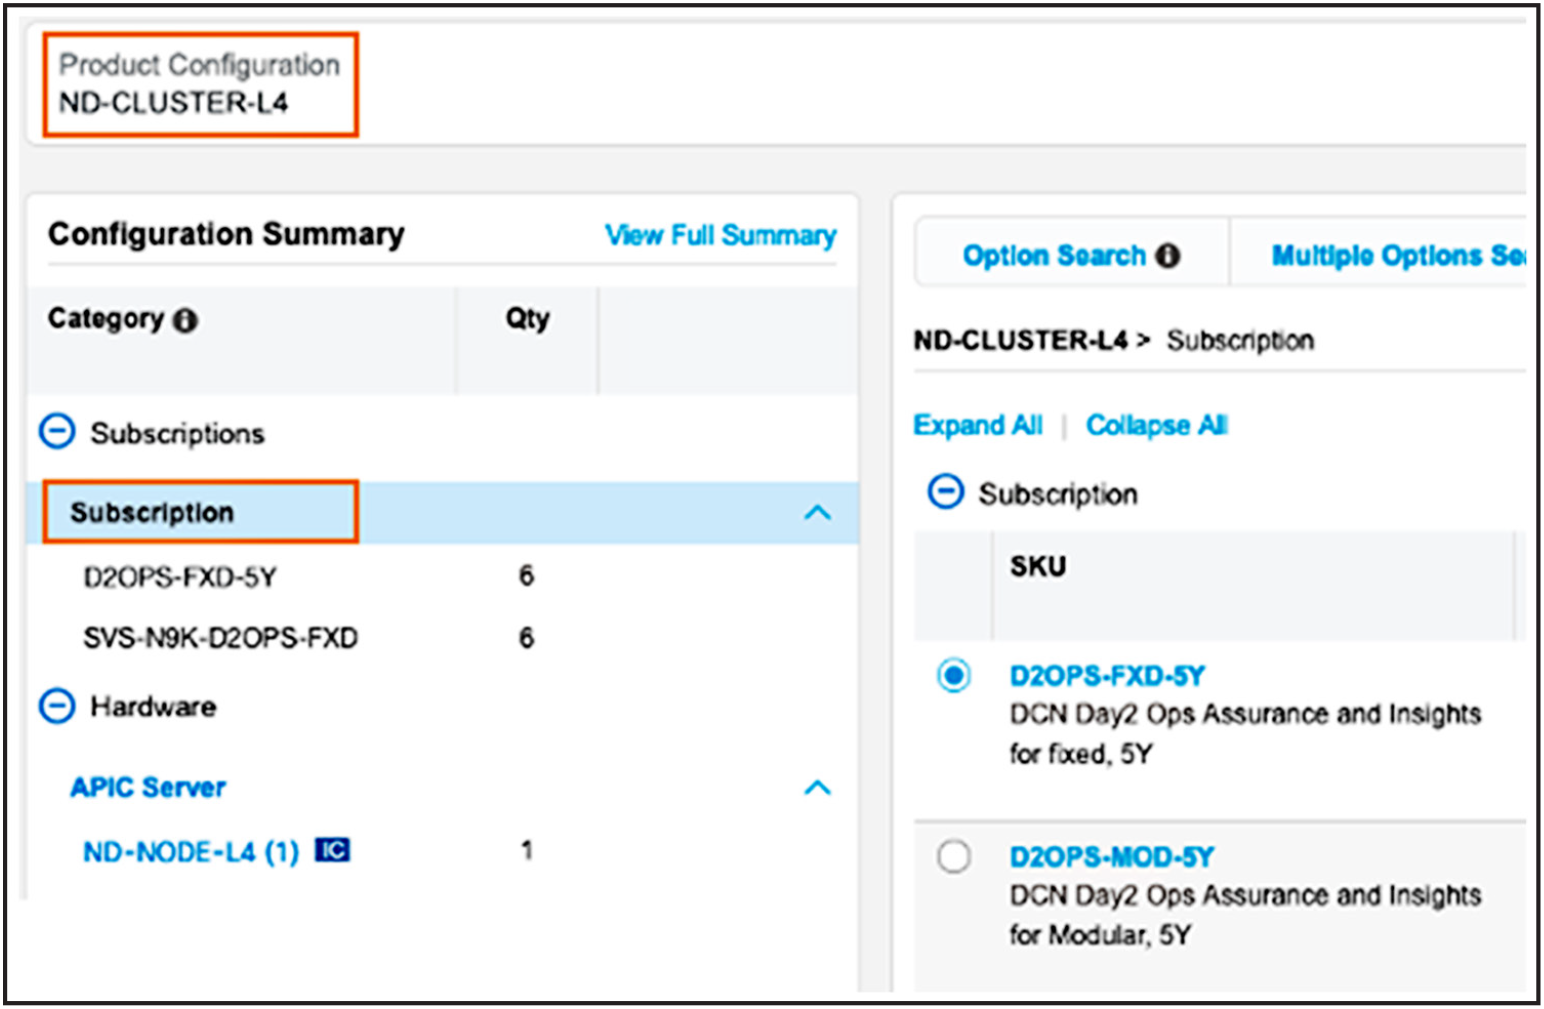 Cisco Nexus Dashboard Platform with subscriptions